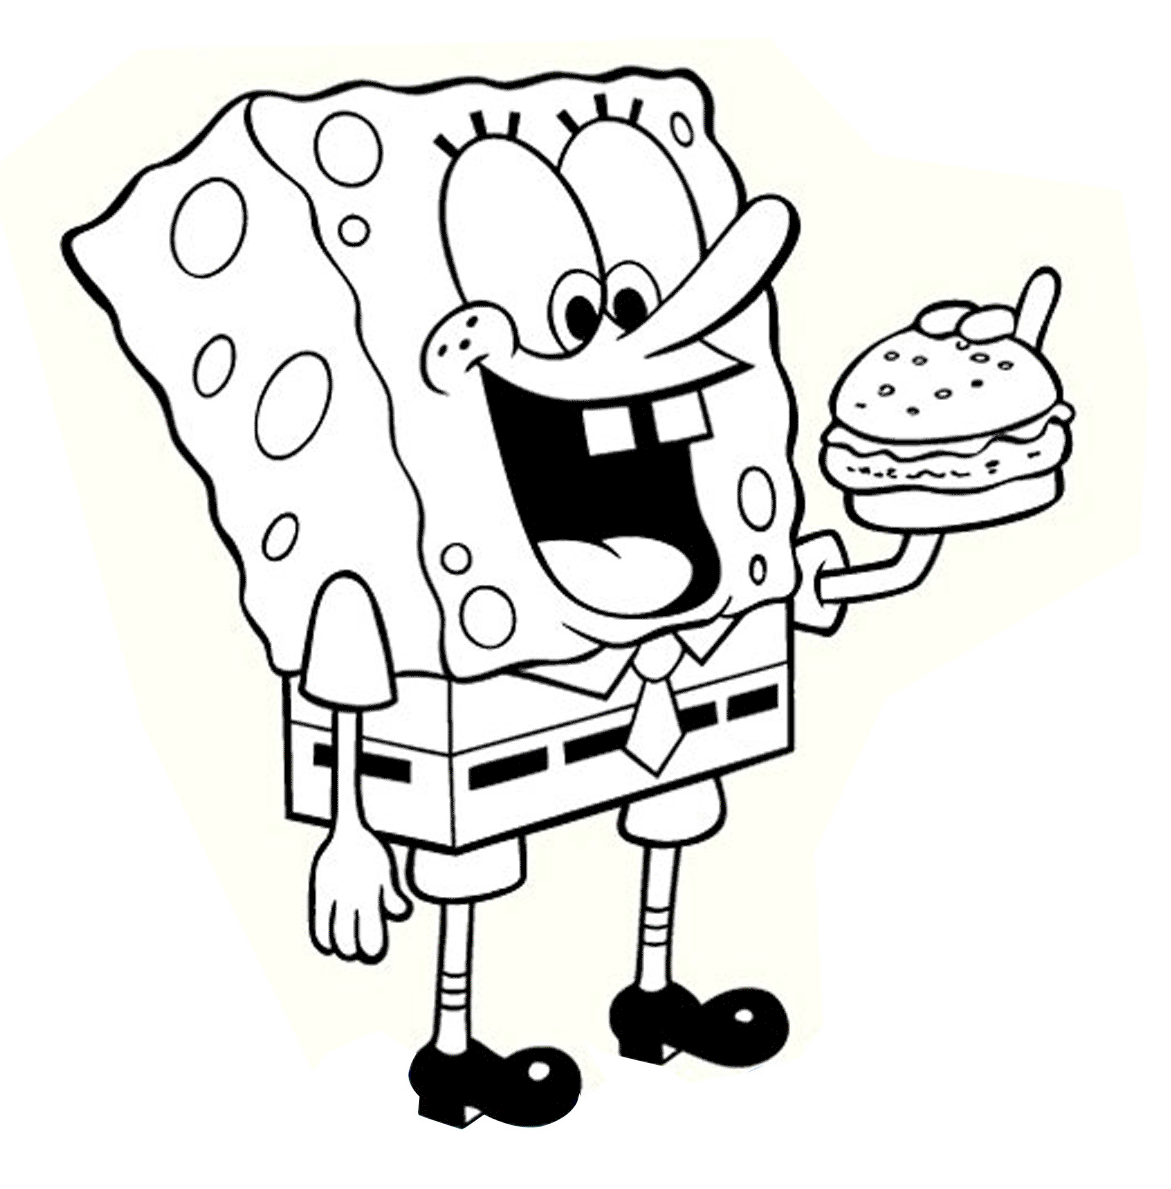 Sponge Bob Square Pants Coloring Pages Pictures 4 موقع العاب شمس